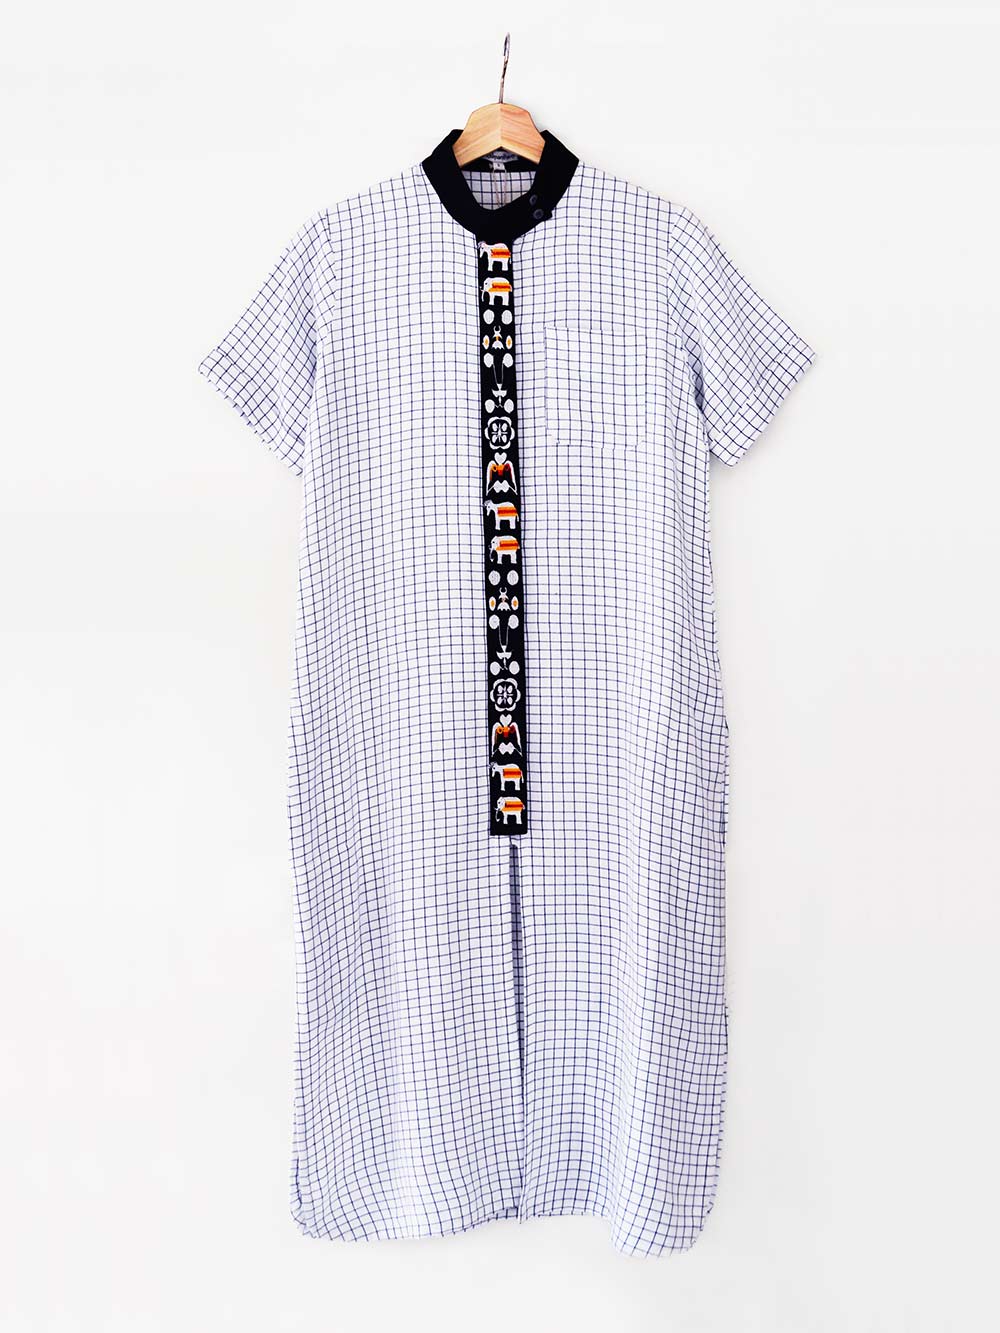 Handwoven Straight Checkered Tunic Dress (Shamee-Lanmee Motif), designed Khumanthem Atelier